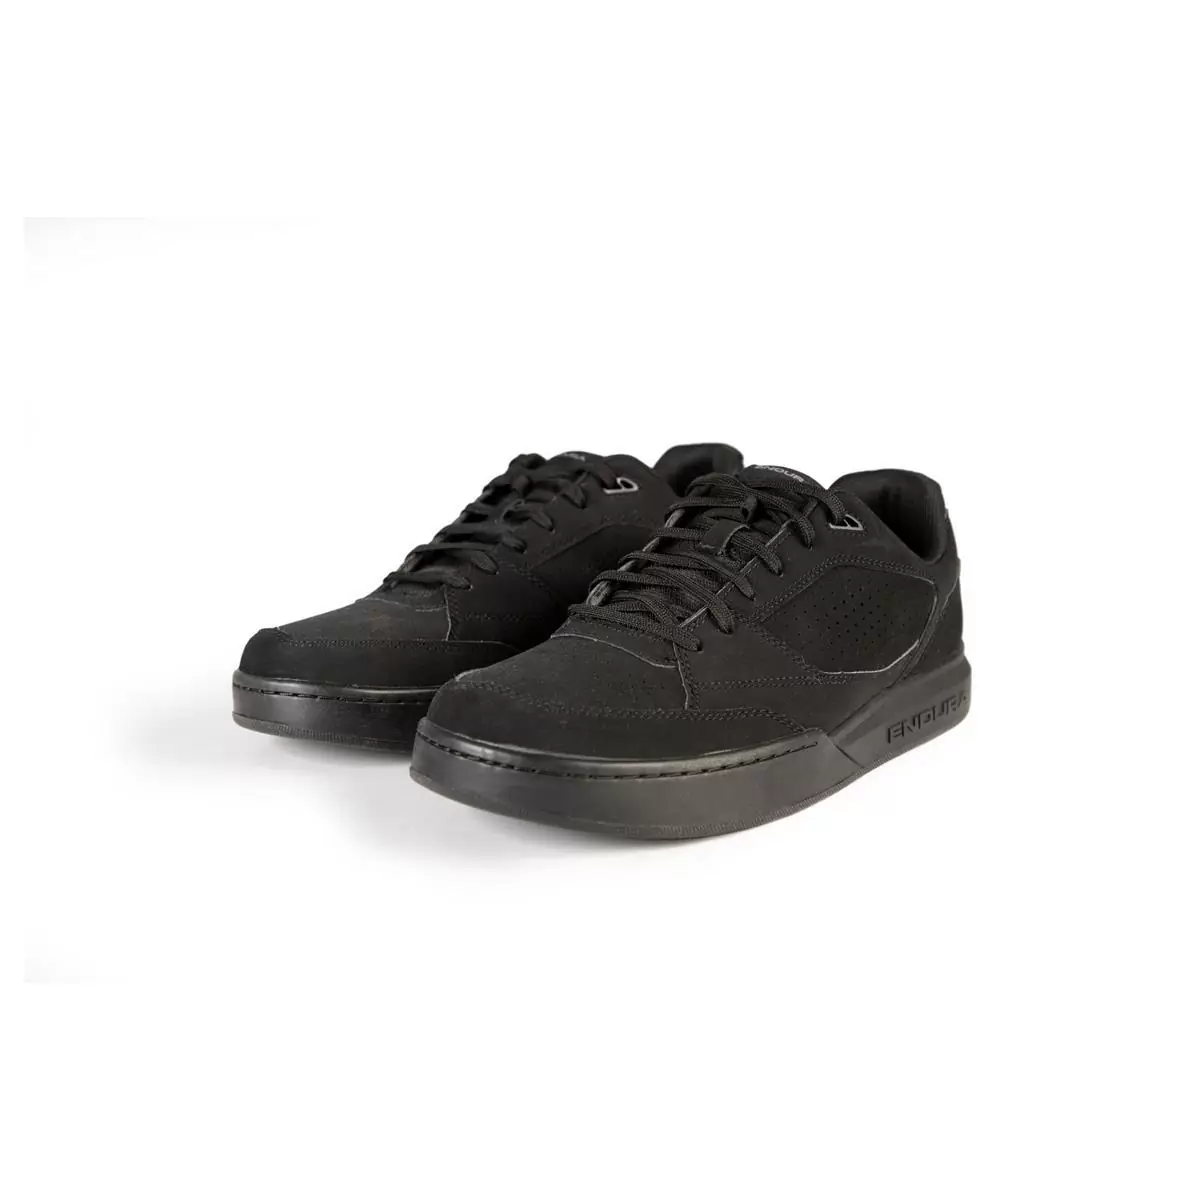 Hummvee Flat Pedal Shoes Black Size 41,5 - image